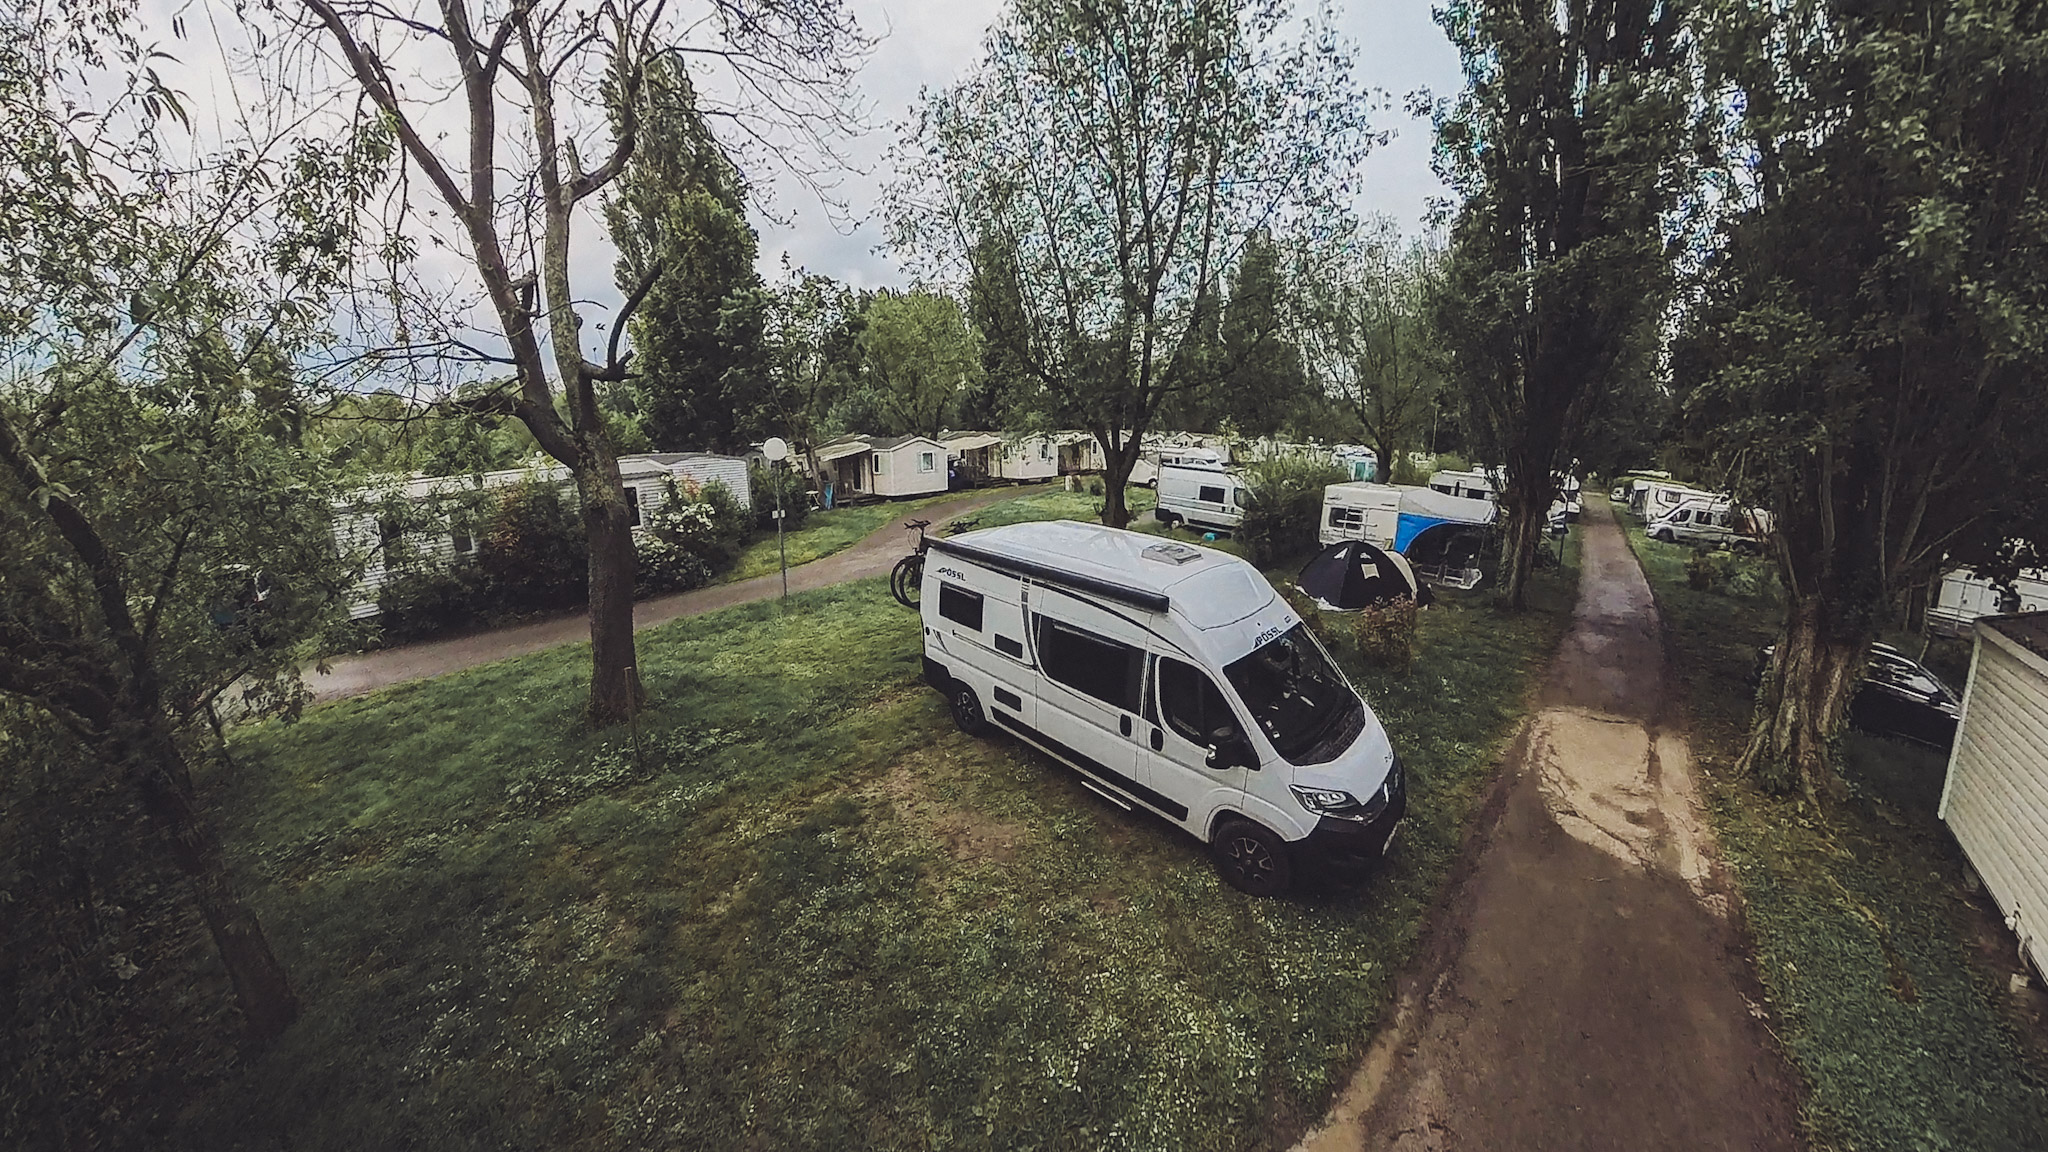 Campingplatz-Review - Unser Städtetrip nach Paris beginnt auf dem Campingplatz Sandaya Paris Maisons-Lafitte